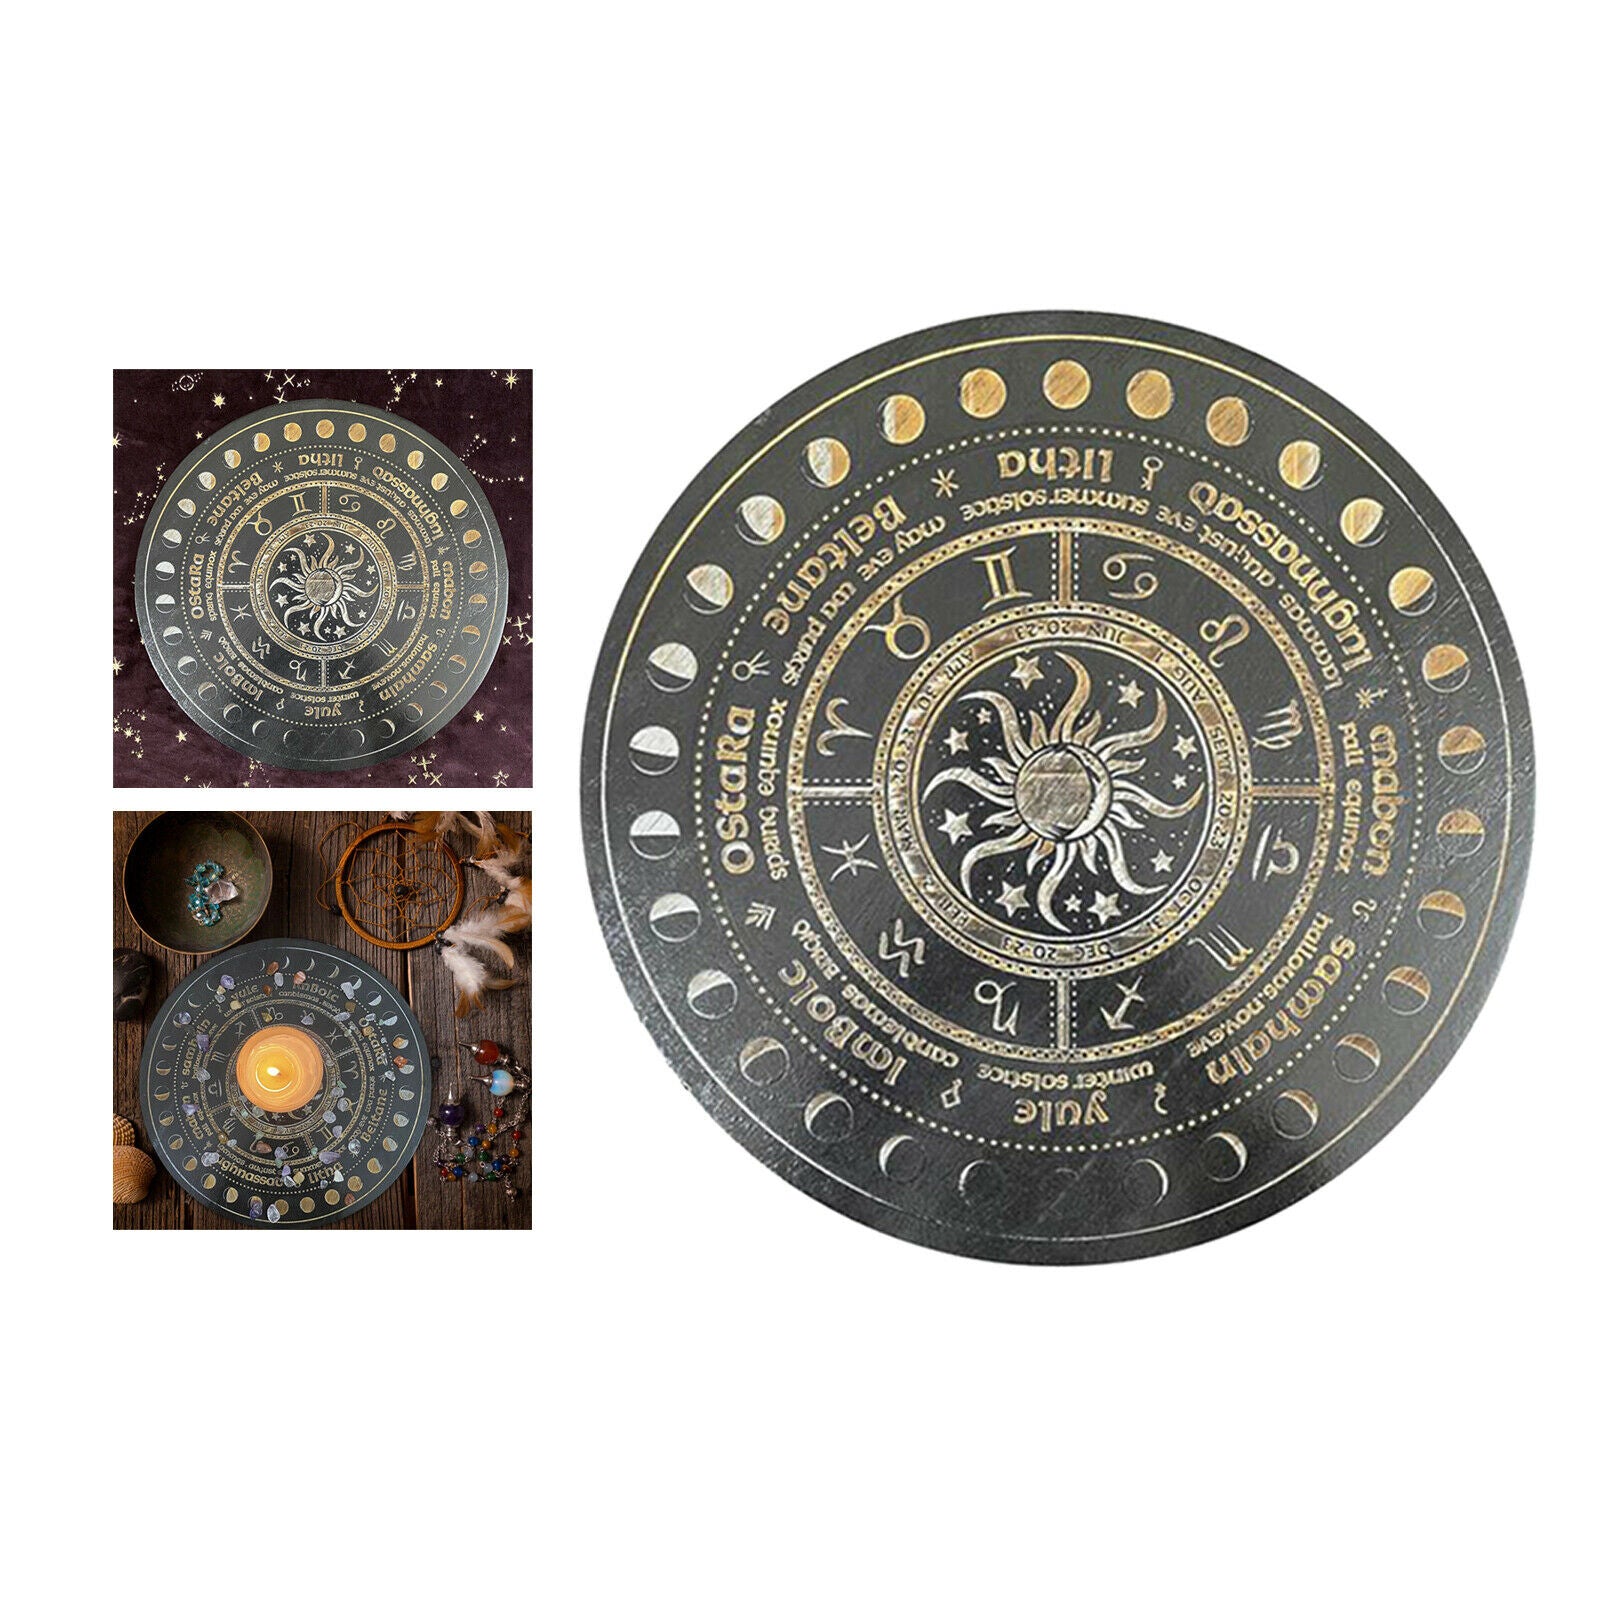 Pendulum Board Wooden Divination Board Metaphysical Dowsing Board